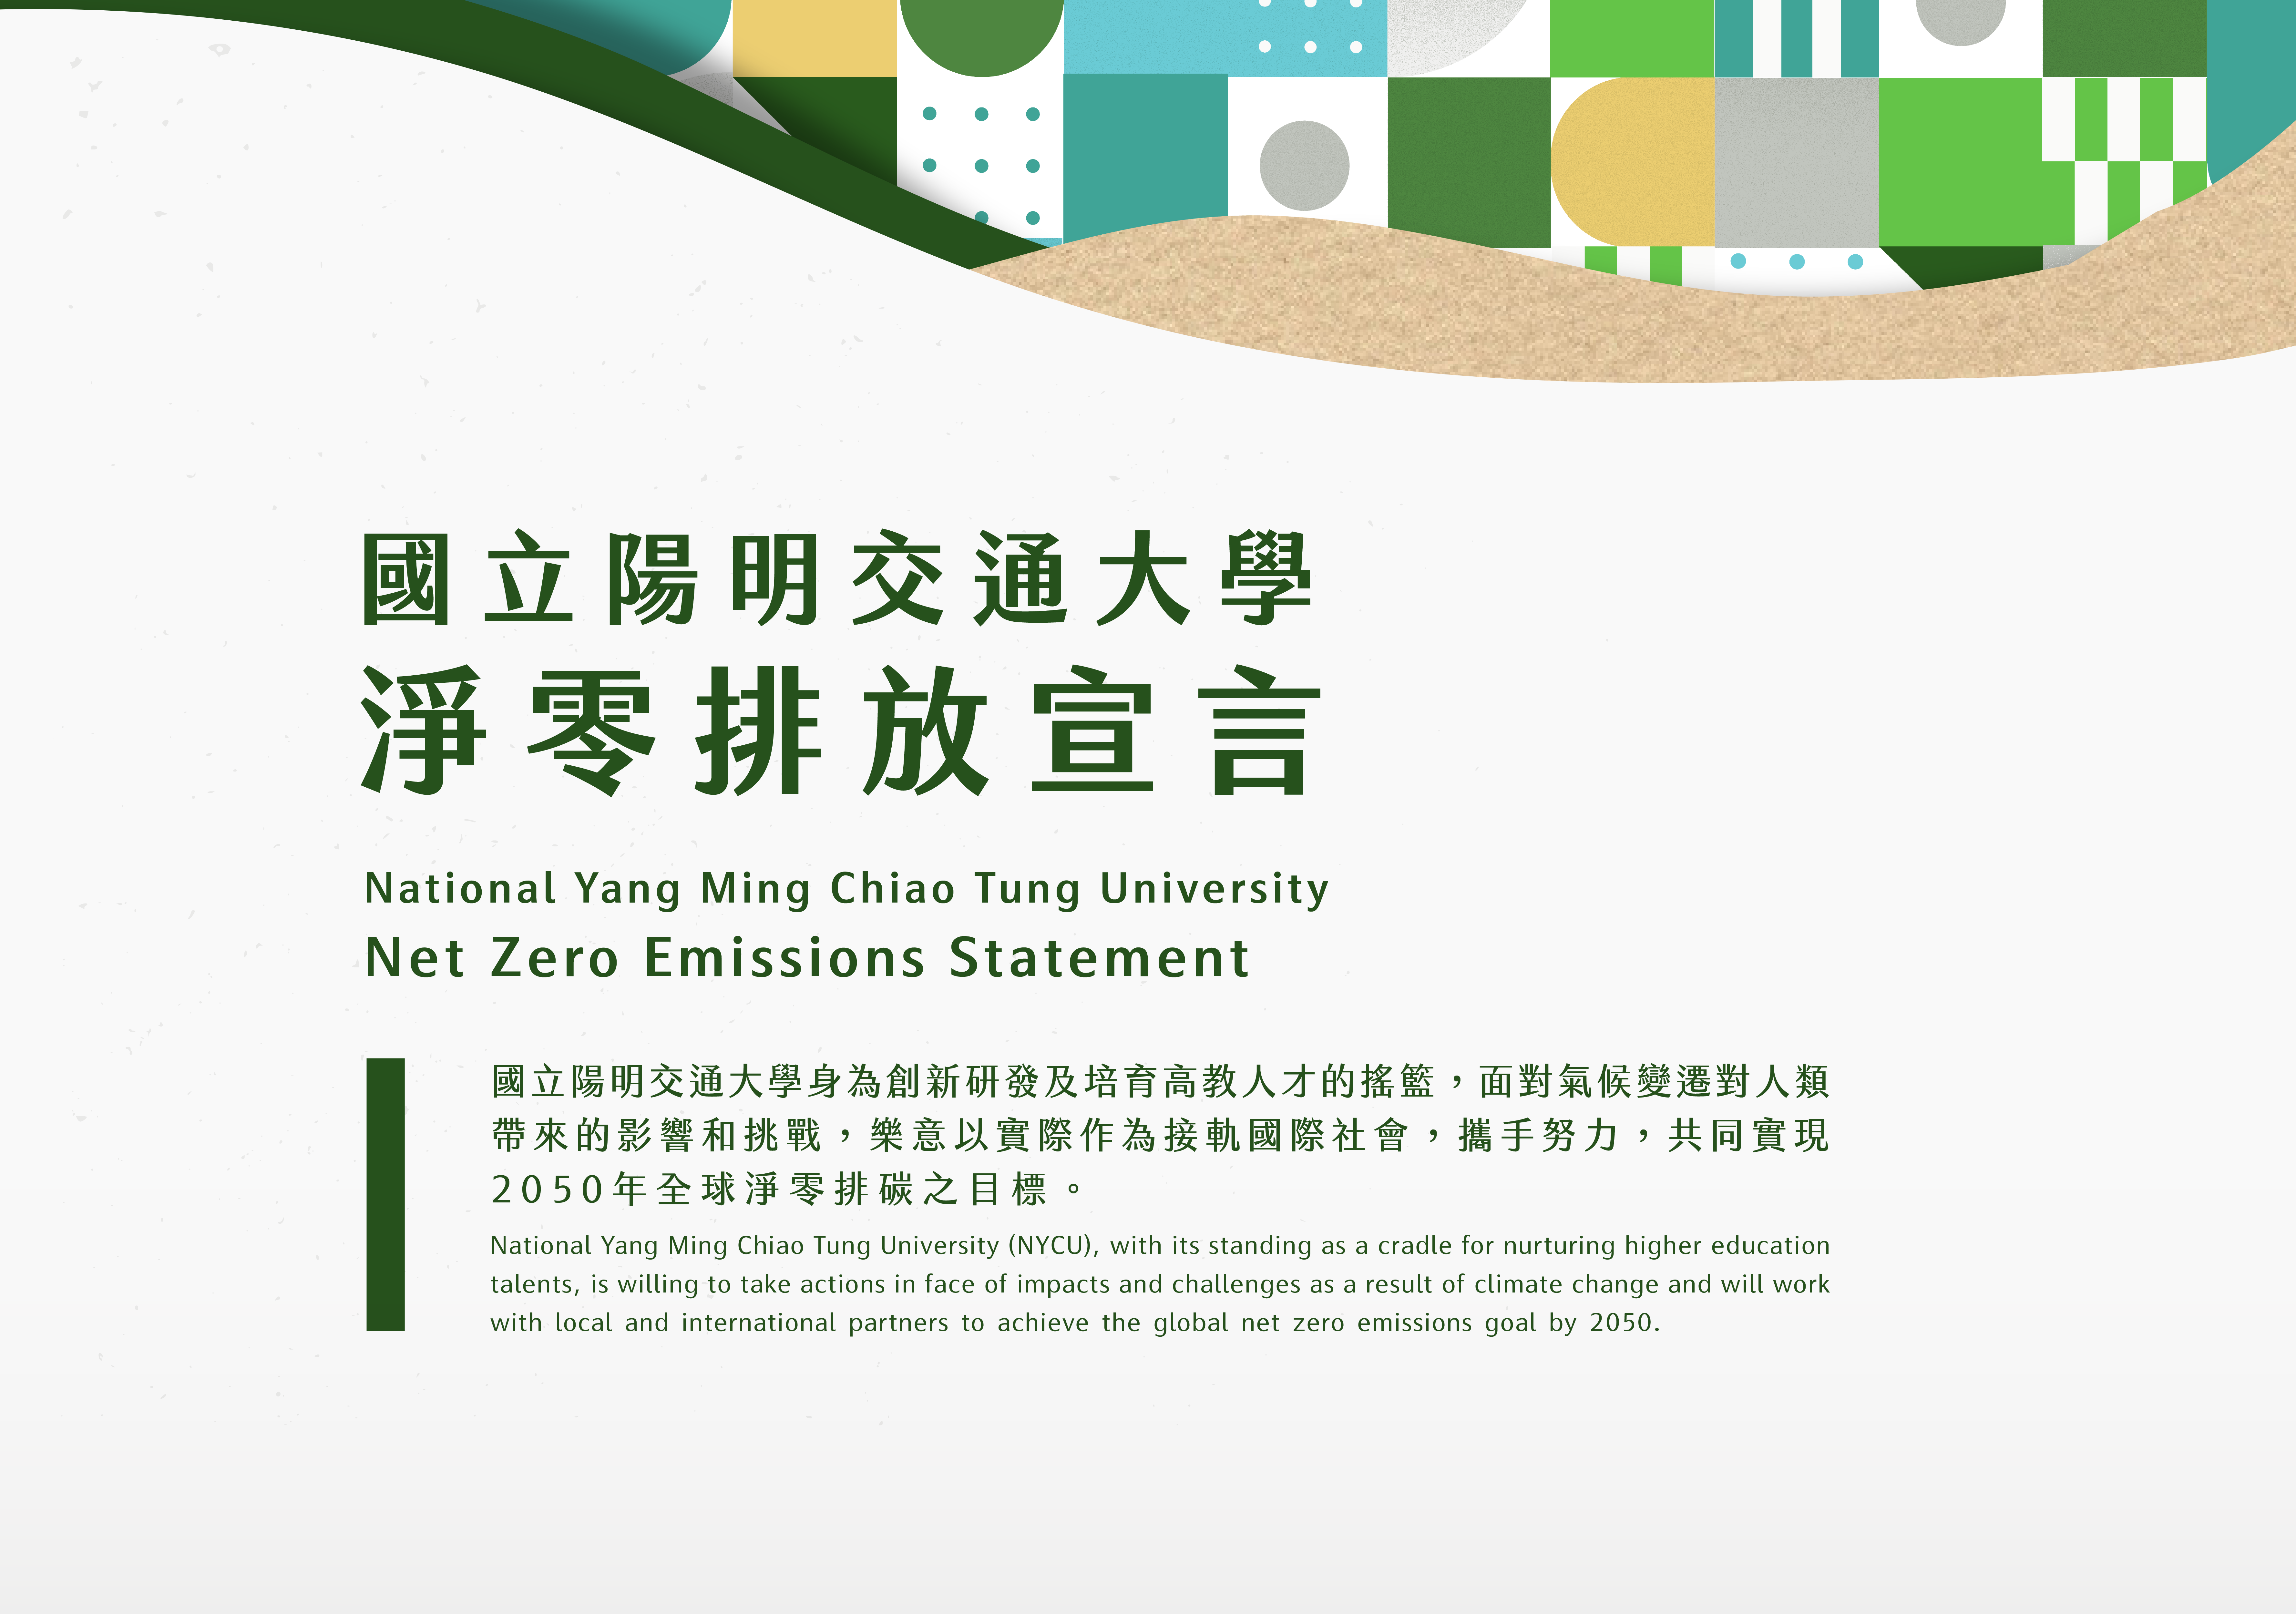 NYCU Declaration of Net Zero Emissions